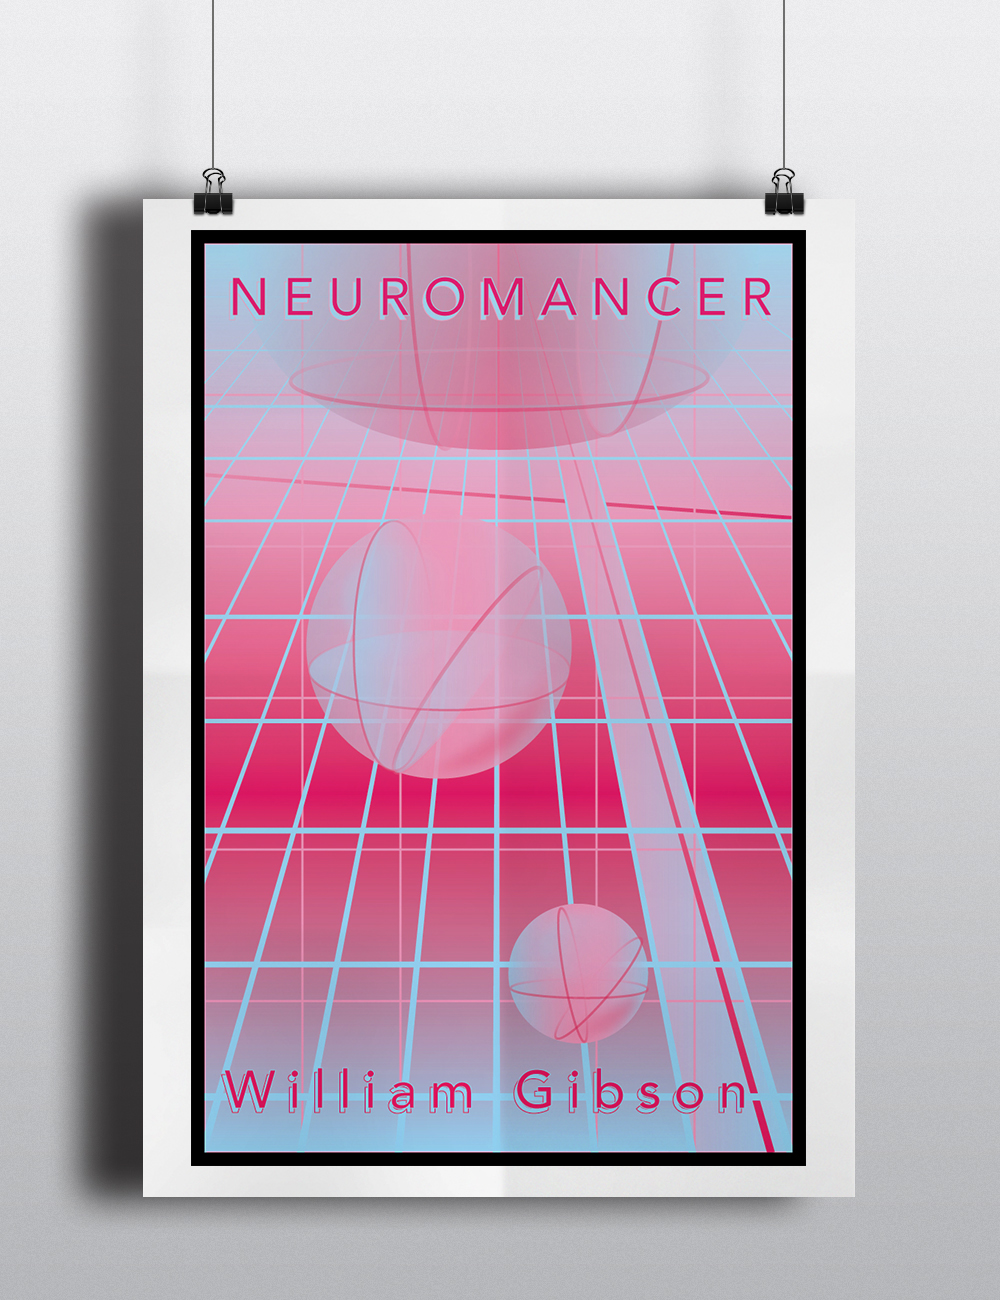 Neuromancer mountains of madness brave new world lovecraft Huxley william gibson book design